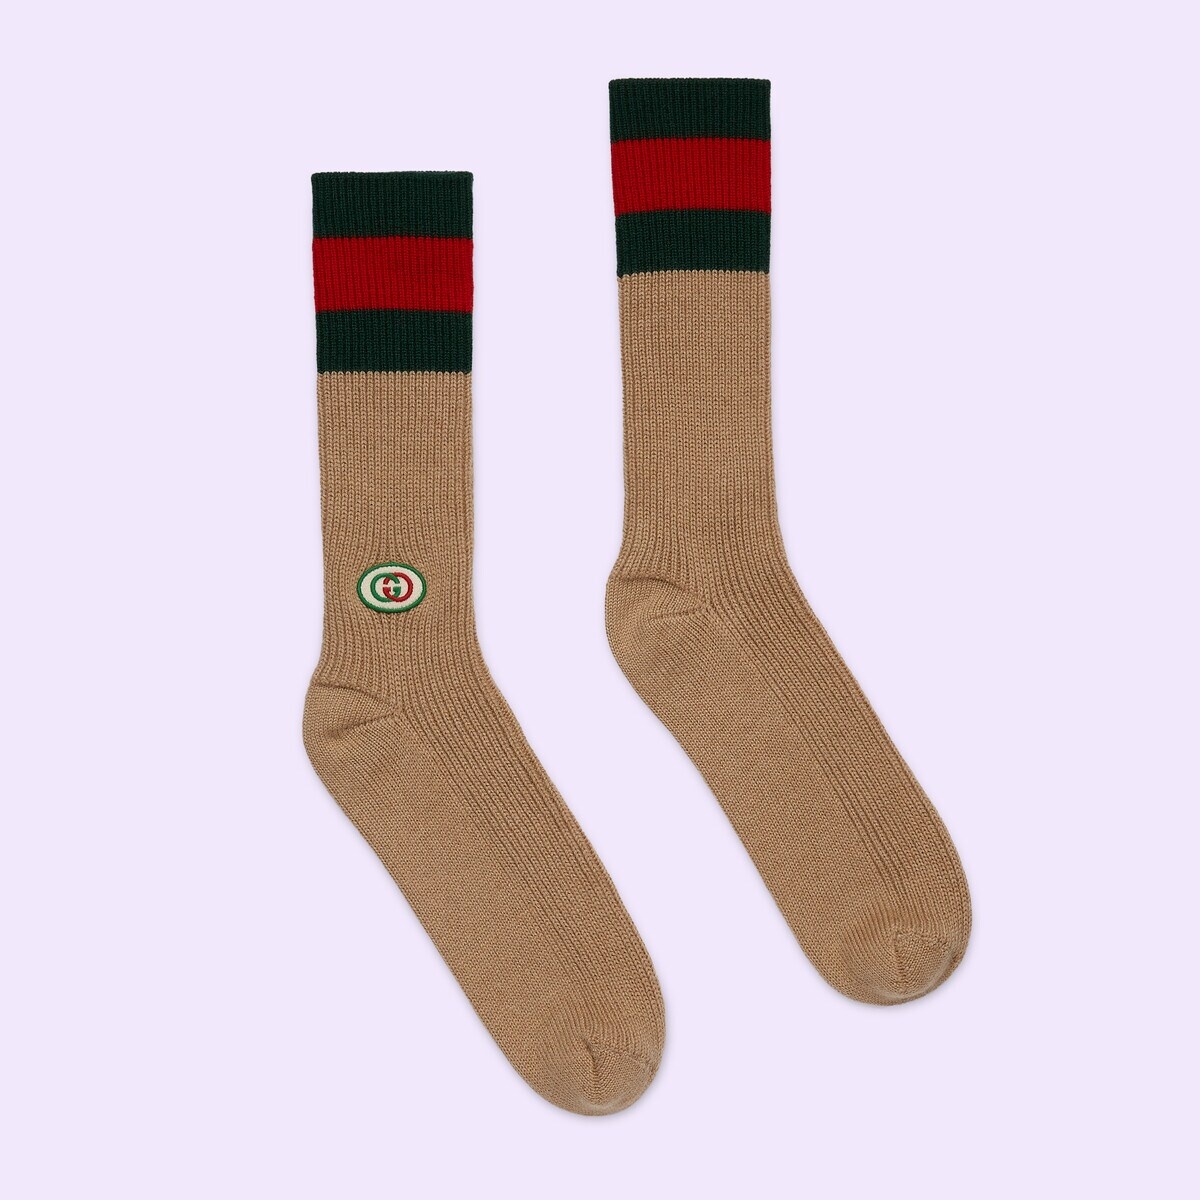 Wool socks with Interlocking G patch - 2